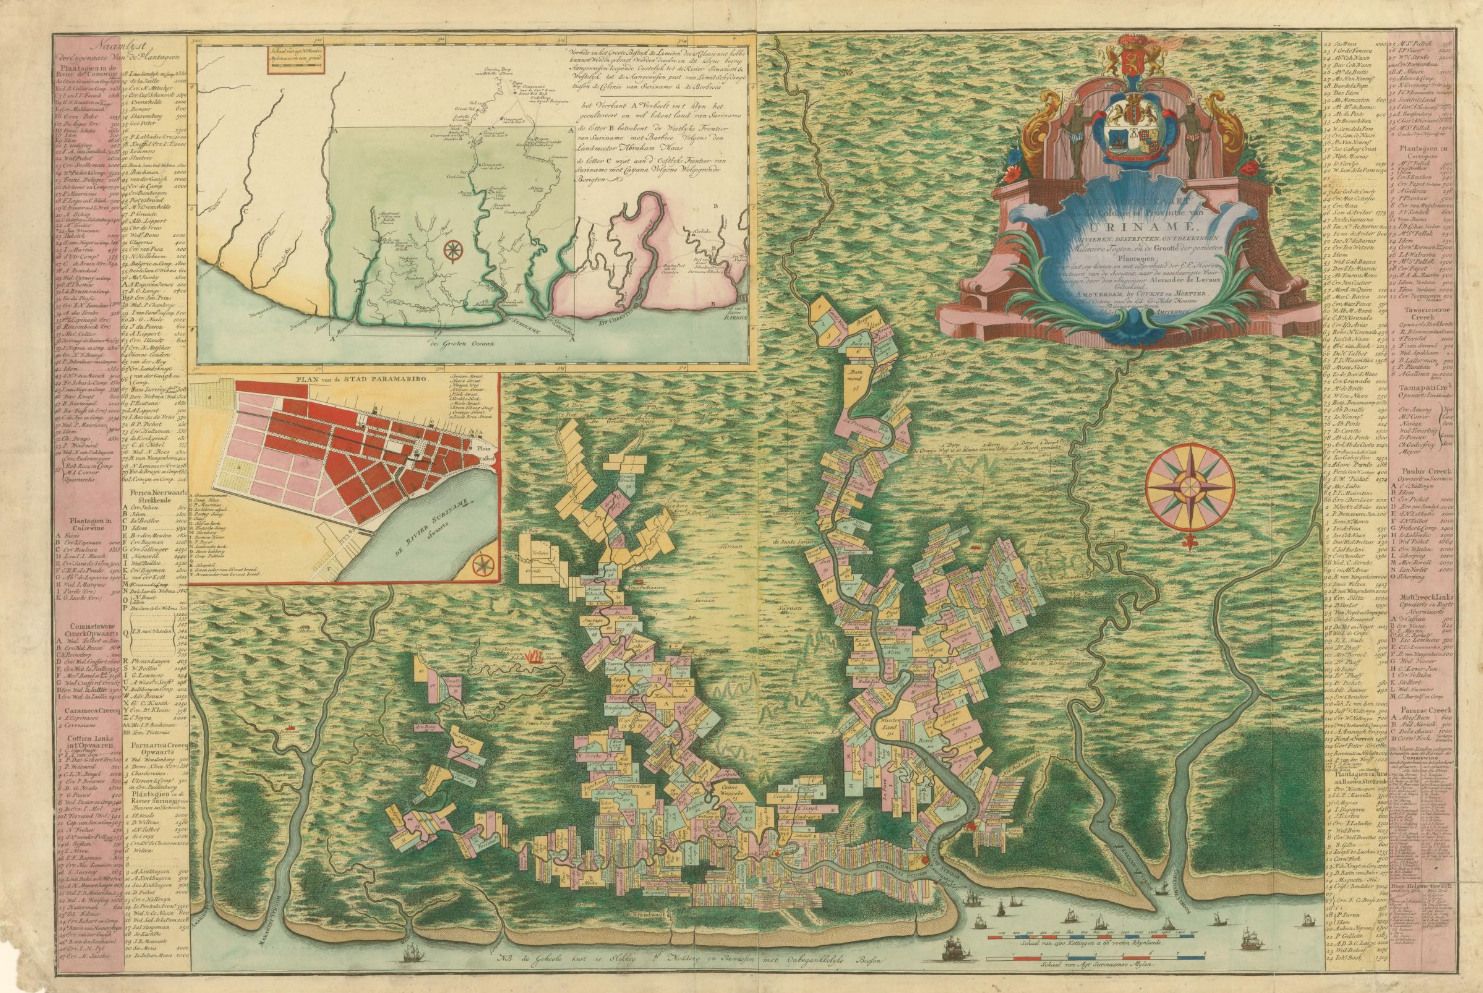 An image of the map “Algemeene Kaart van de Colonie of Provintie van Suriname,” by Alexander de Lavaux